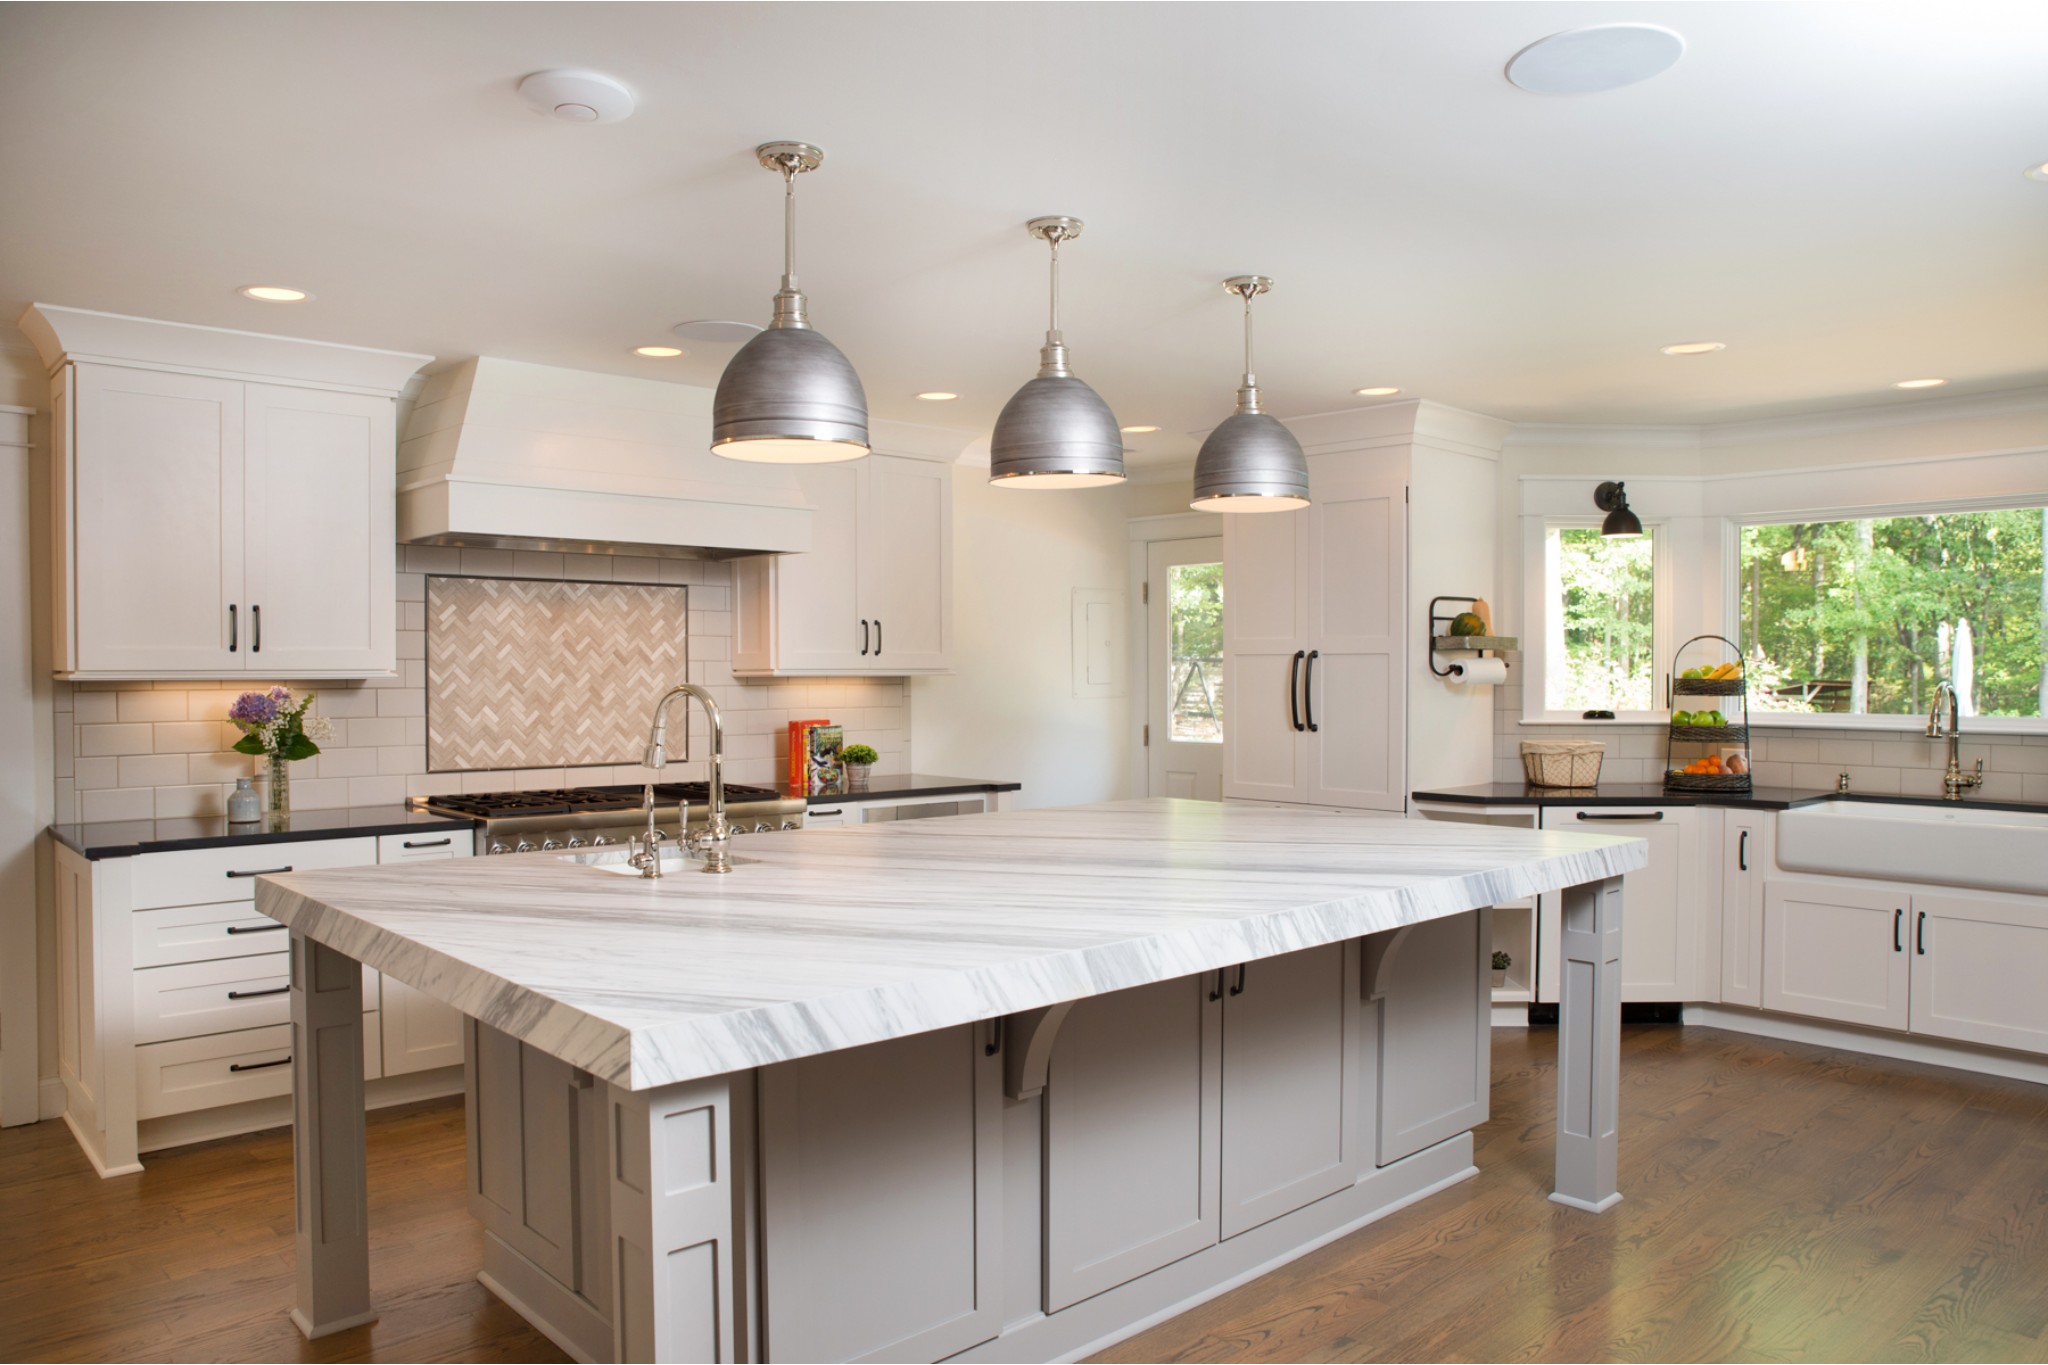 Kitchen renovation large granite island with storage chrome pendant lights white cabinets